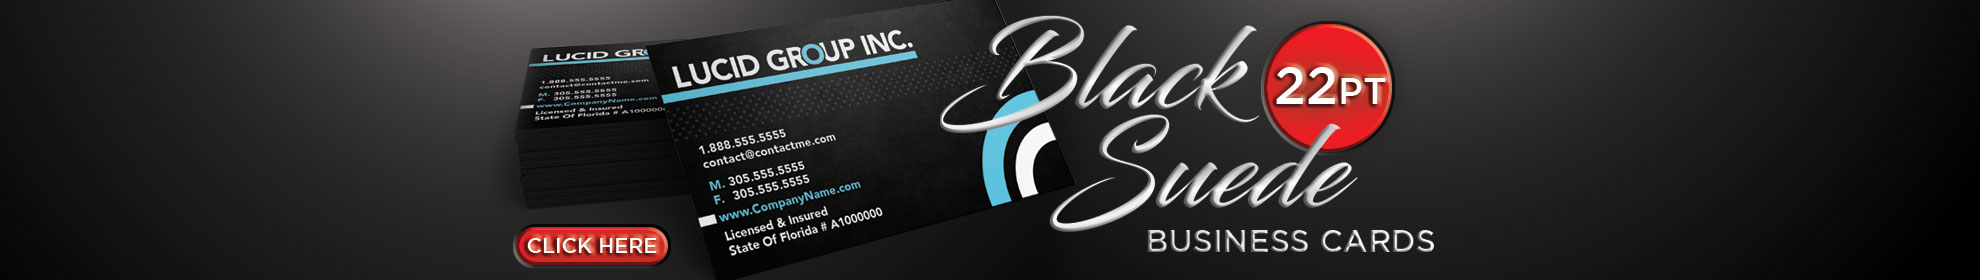 Black Suede Business Cards